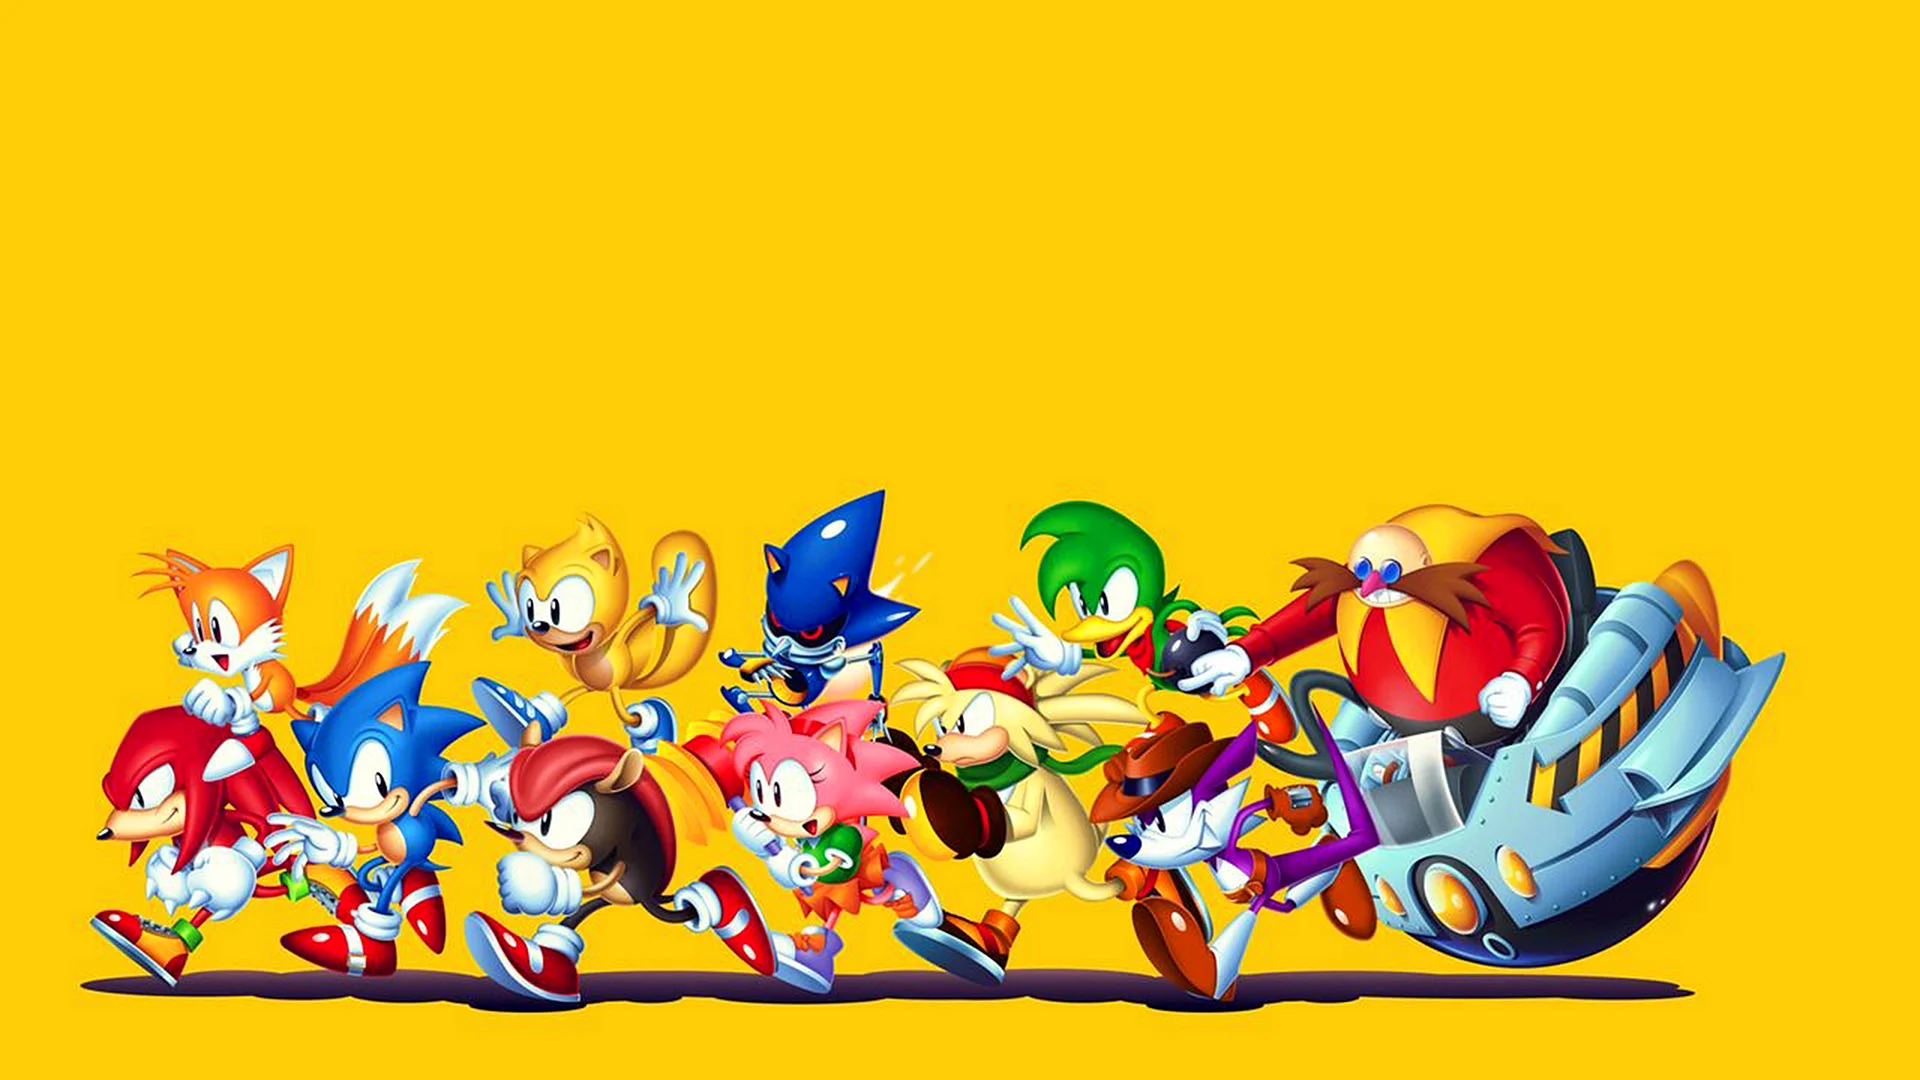 Sonic Mania Wallpaper